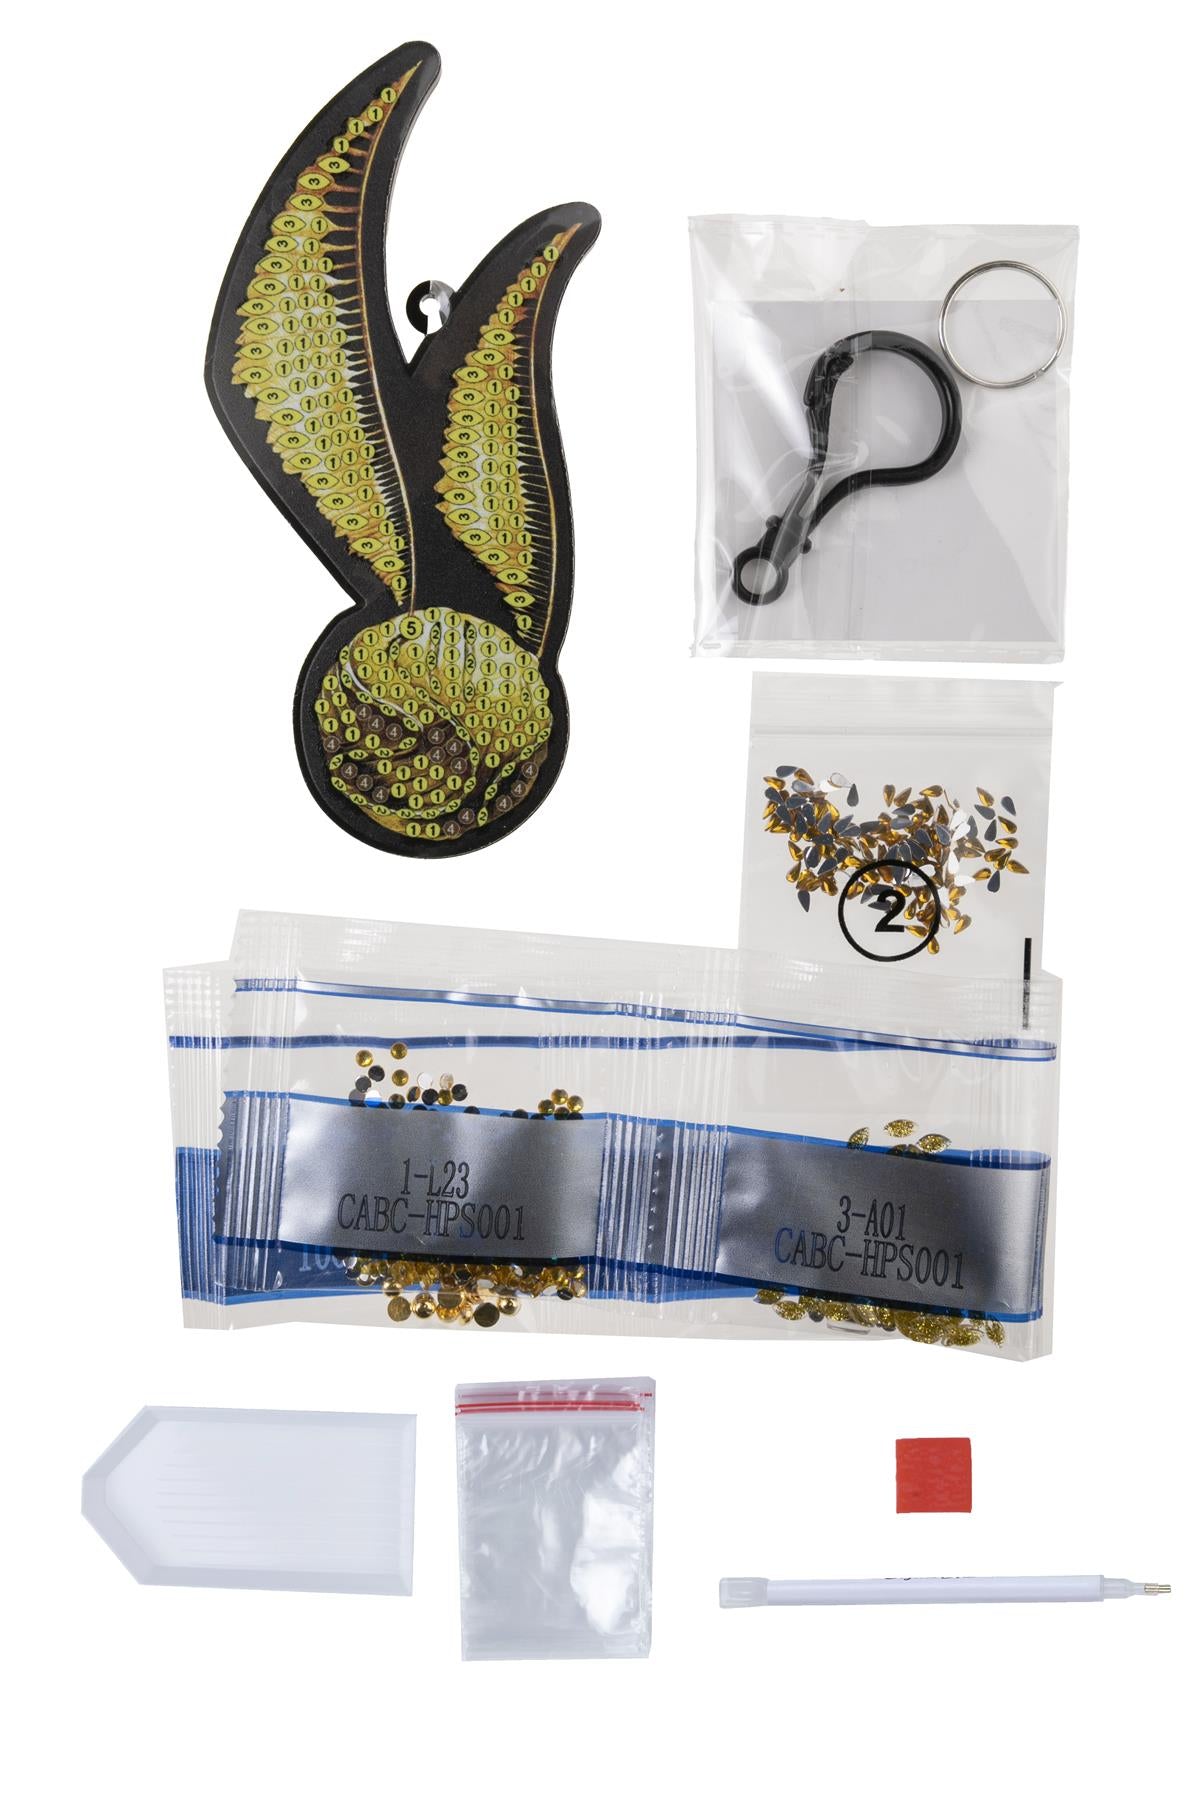 Harry Potter Golden Snitch Crystal Art Backpack Charm Kit